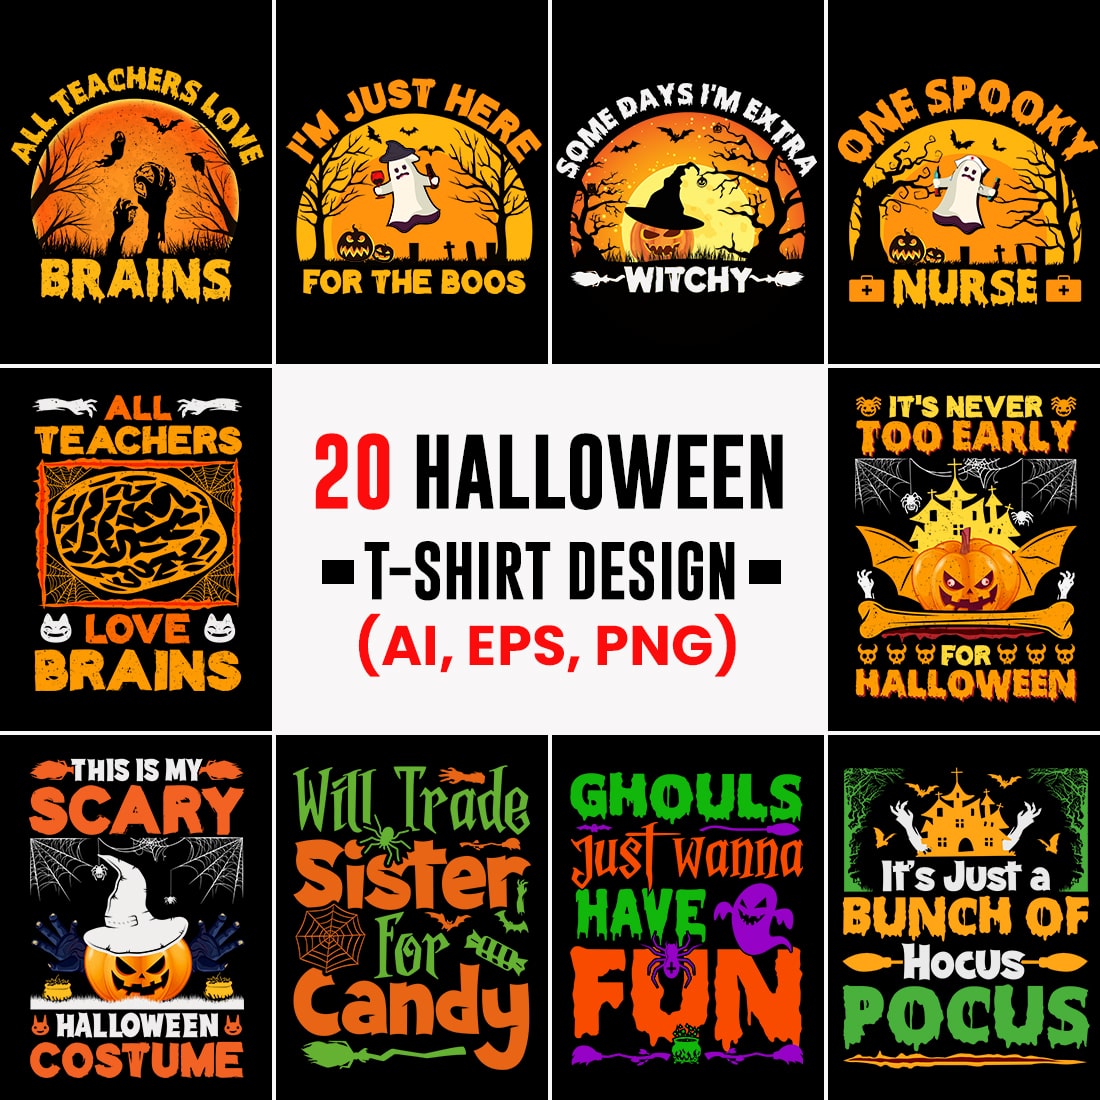 20 Halloween T-shirt Design Bundle cover image.